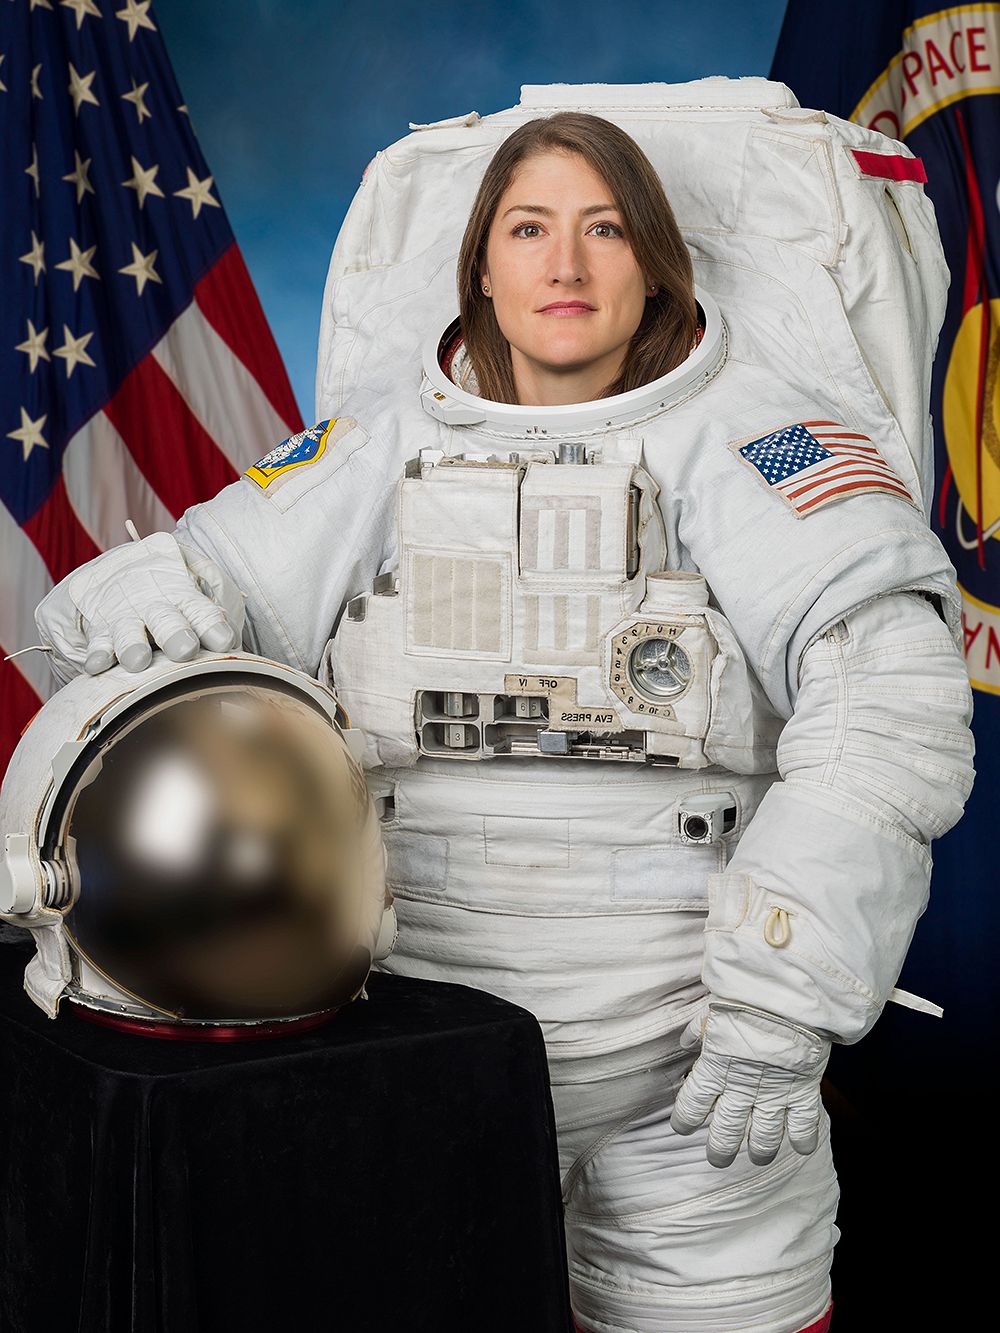 Official portrait of NASA astronaut Christina Koch